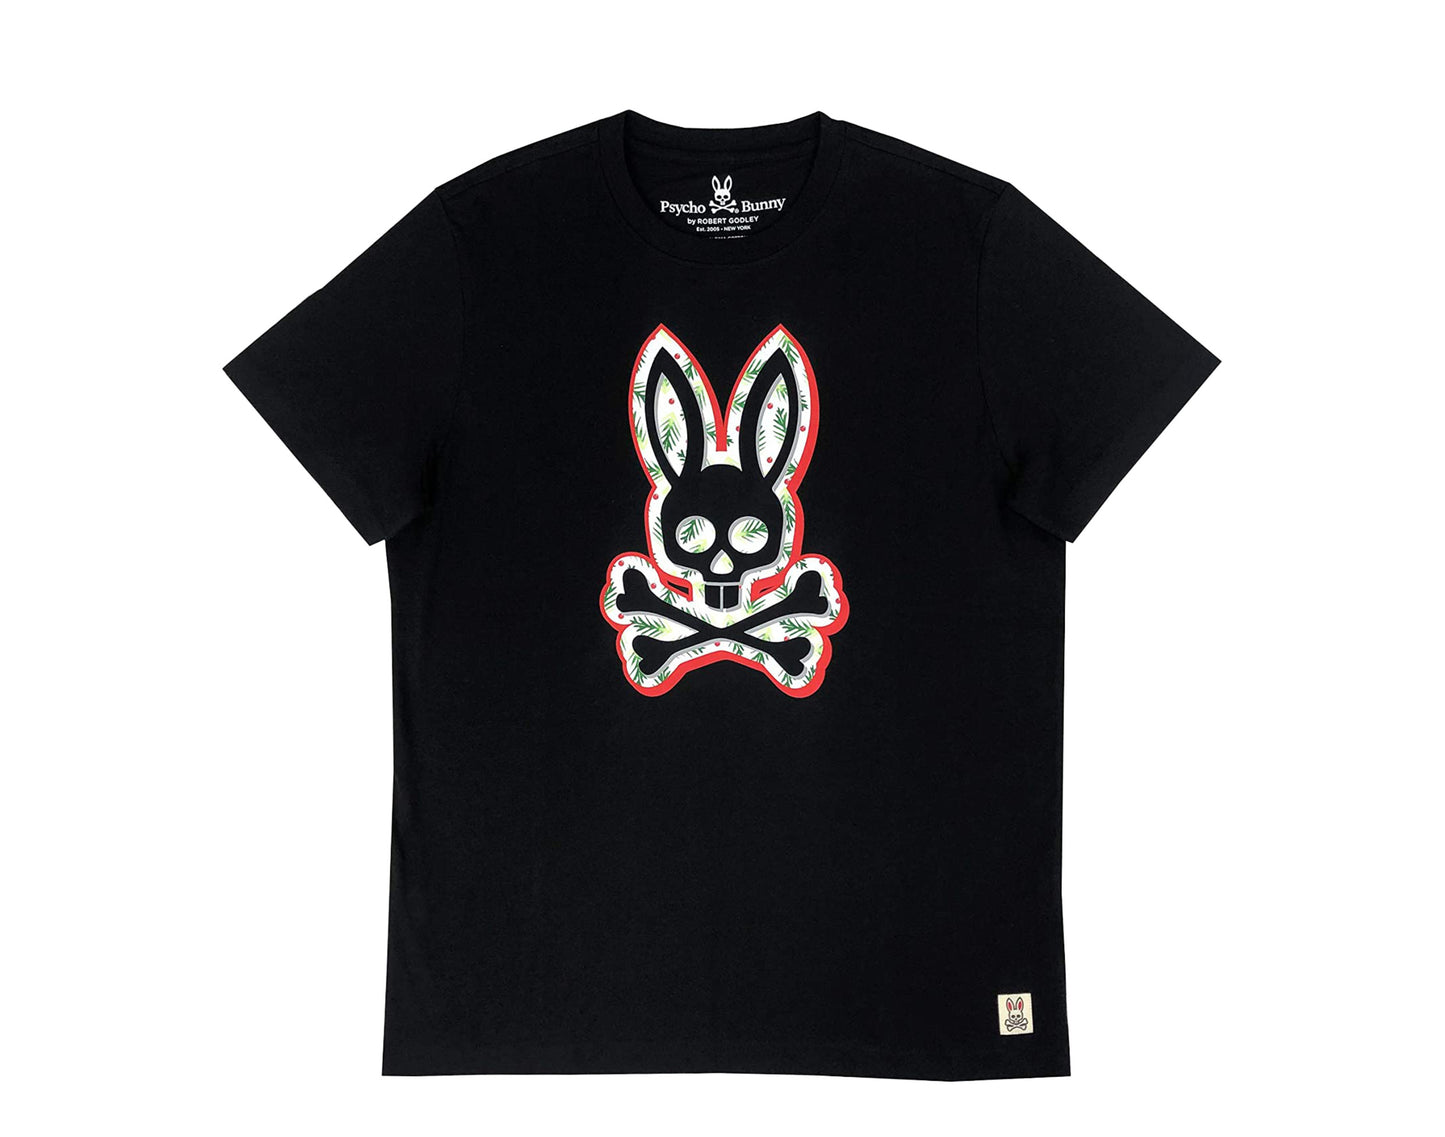 Psycho Bunny Dalton Graphic Black Men's Tee Shirt B6U948H1PC-BLK